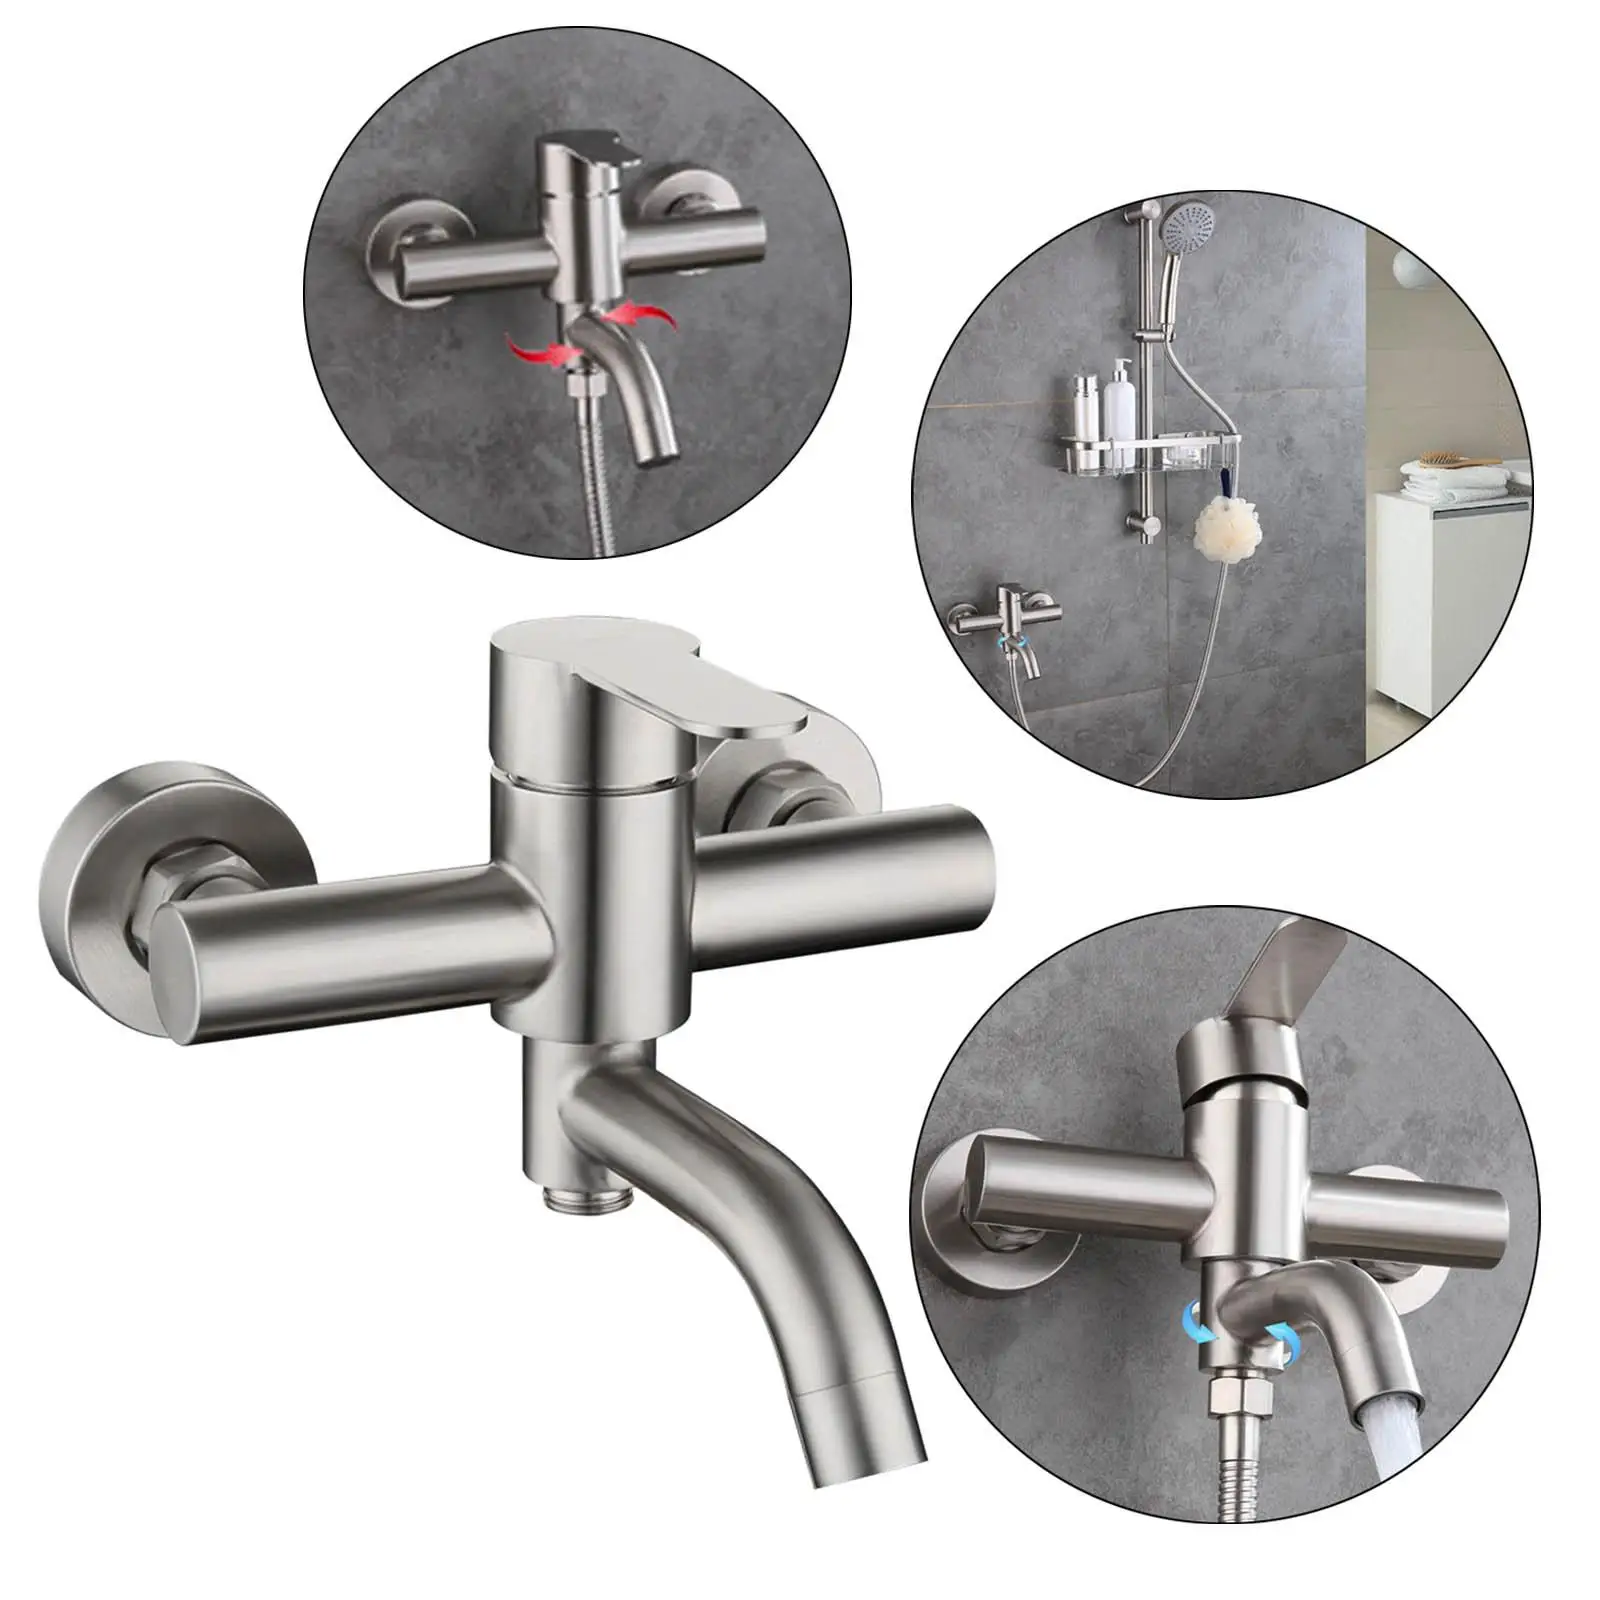 Shower Mixer Faucet Install Range 13-17cm Bathroom Accessories Universal